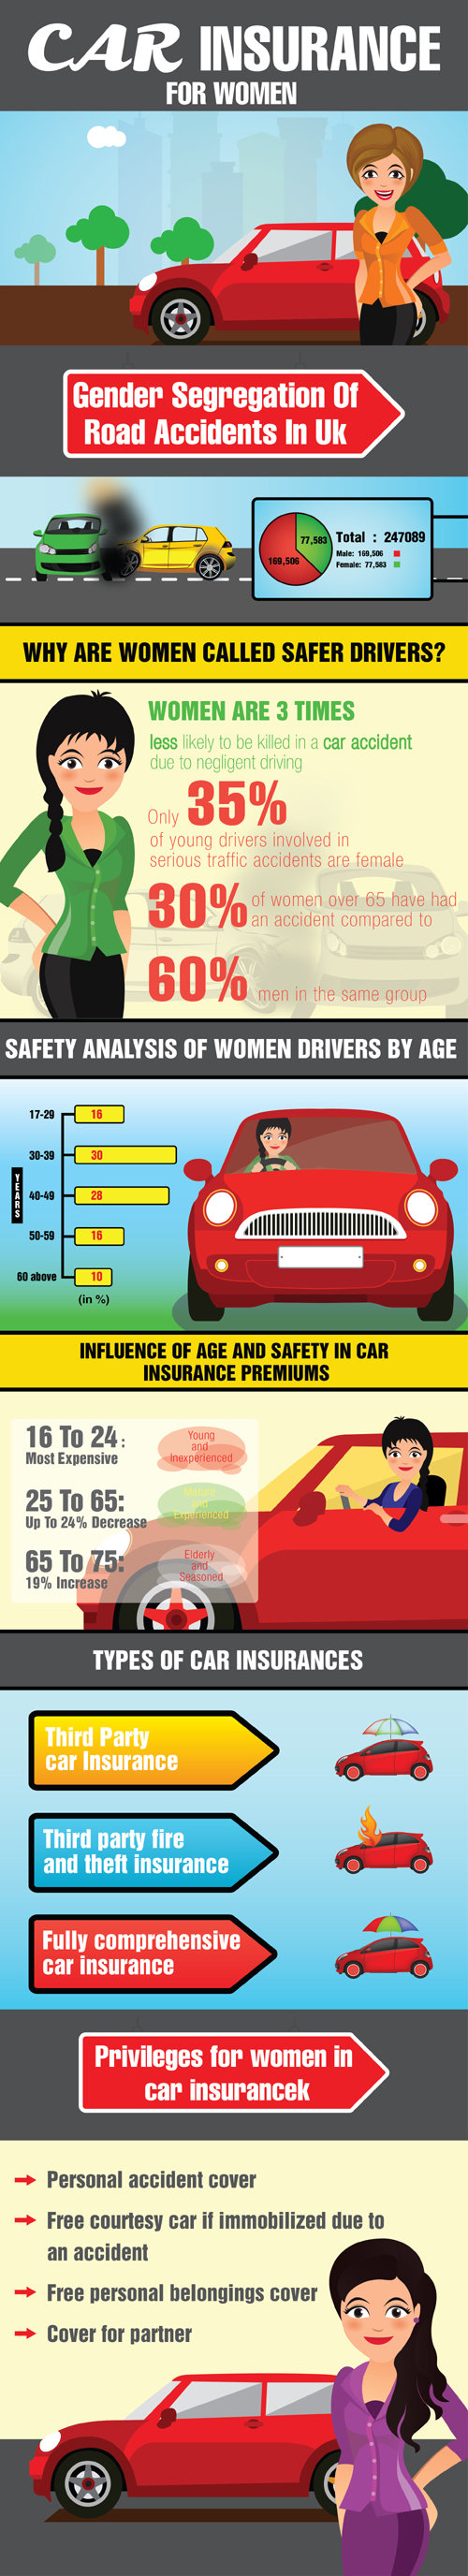 car-insurance-for-women-infographic-plaza